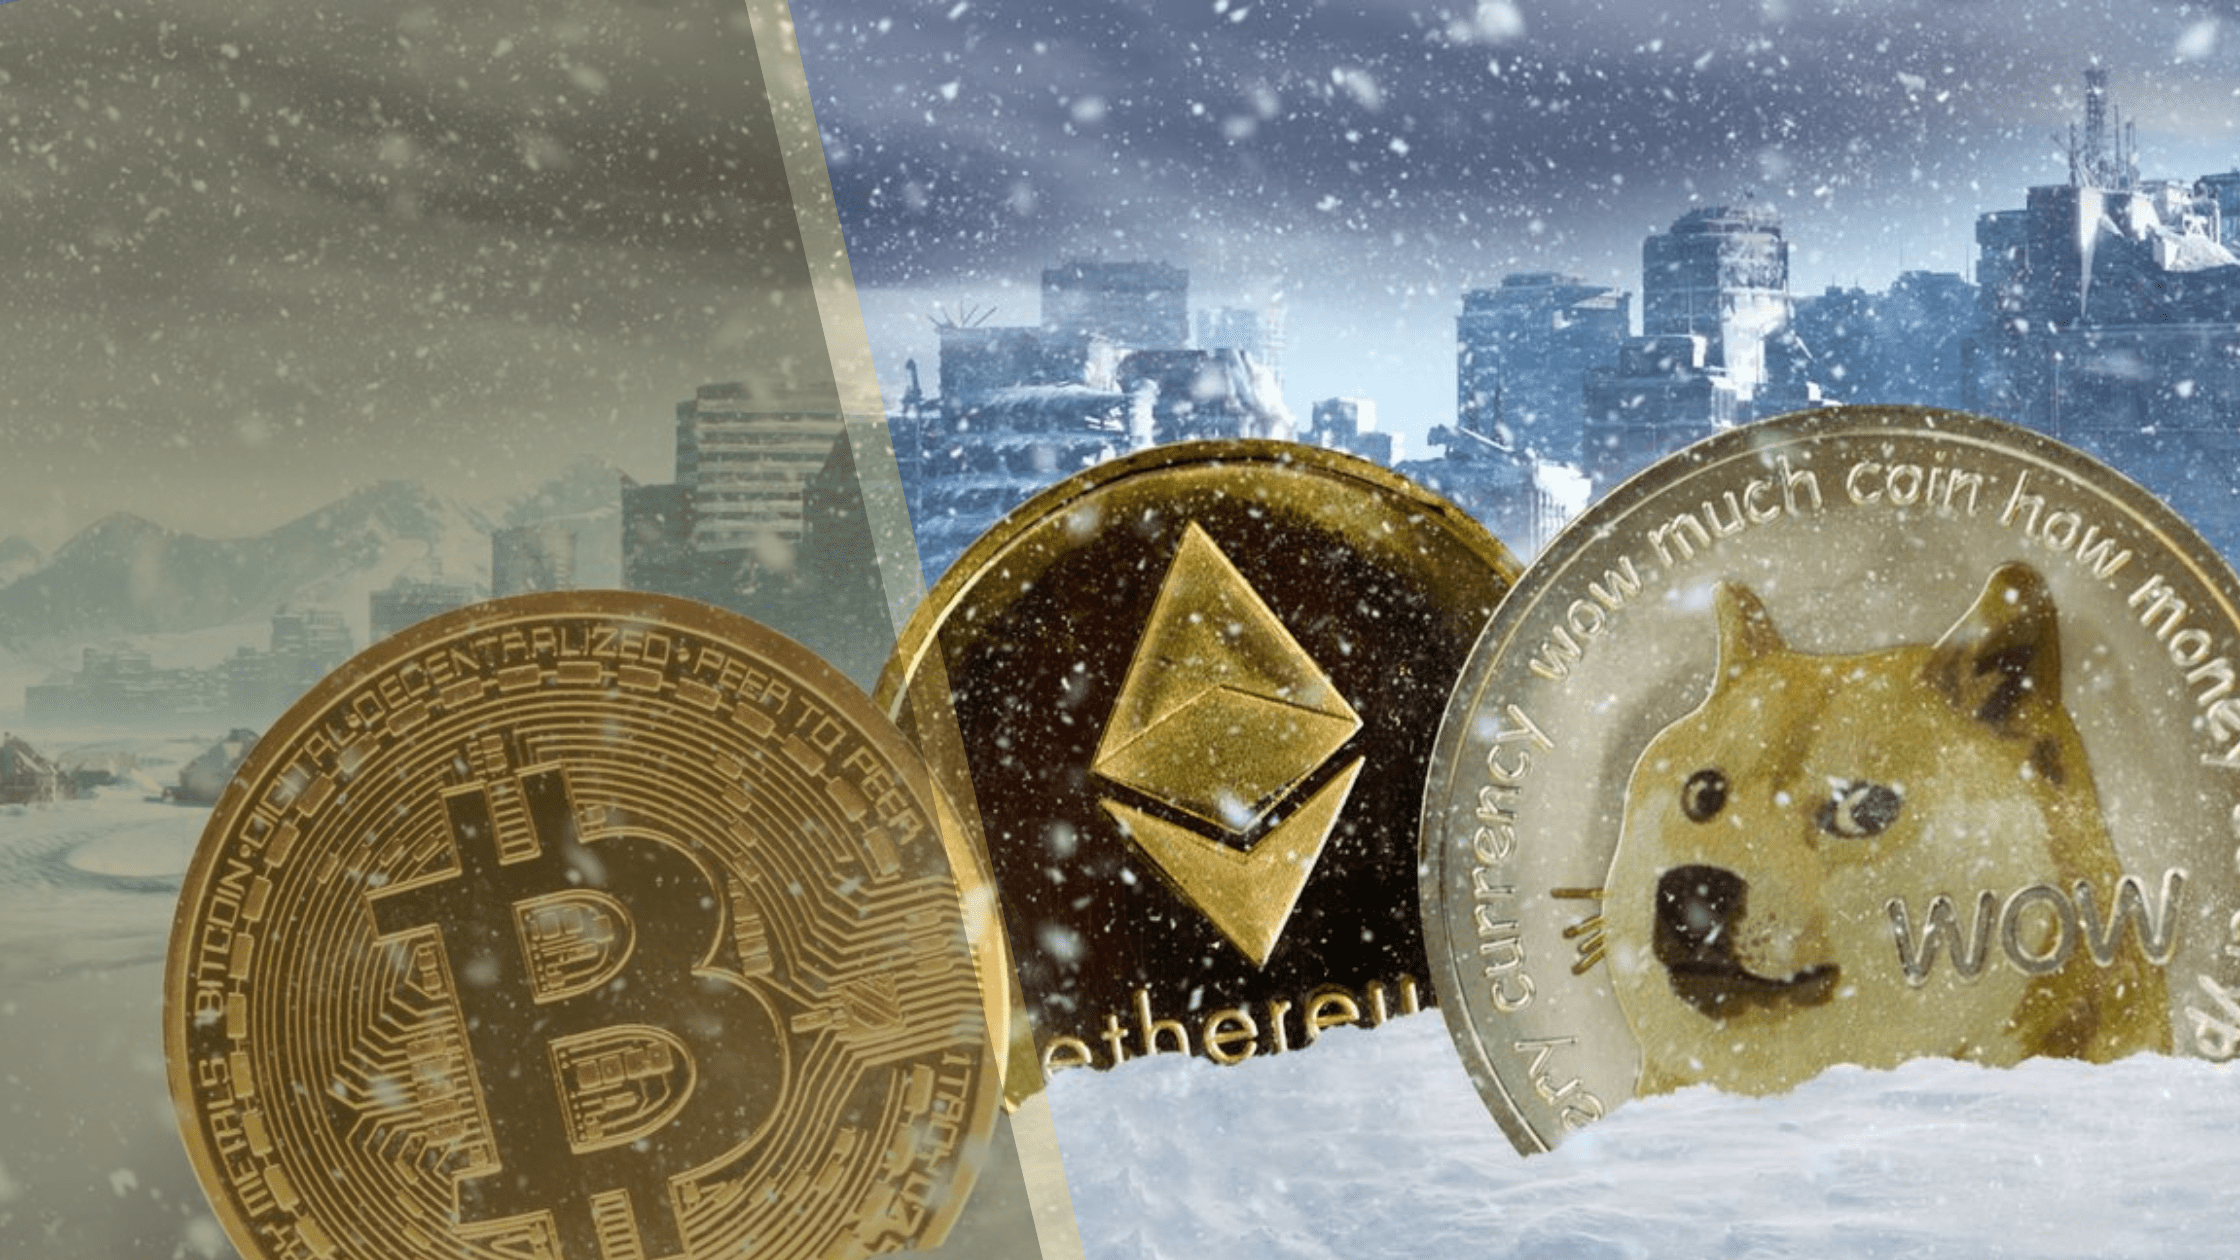 The Crypto Winter